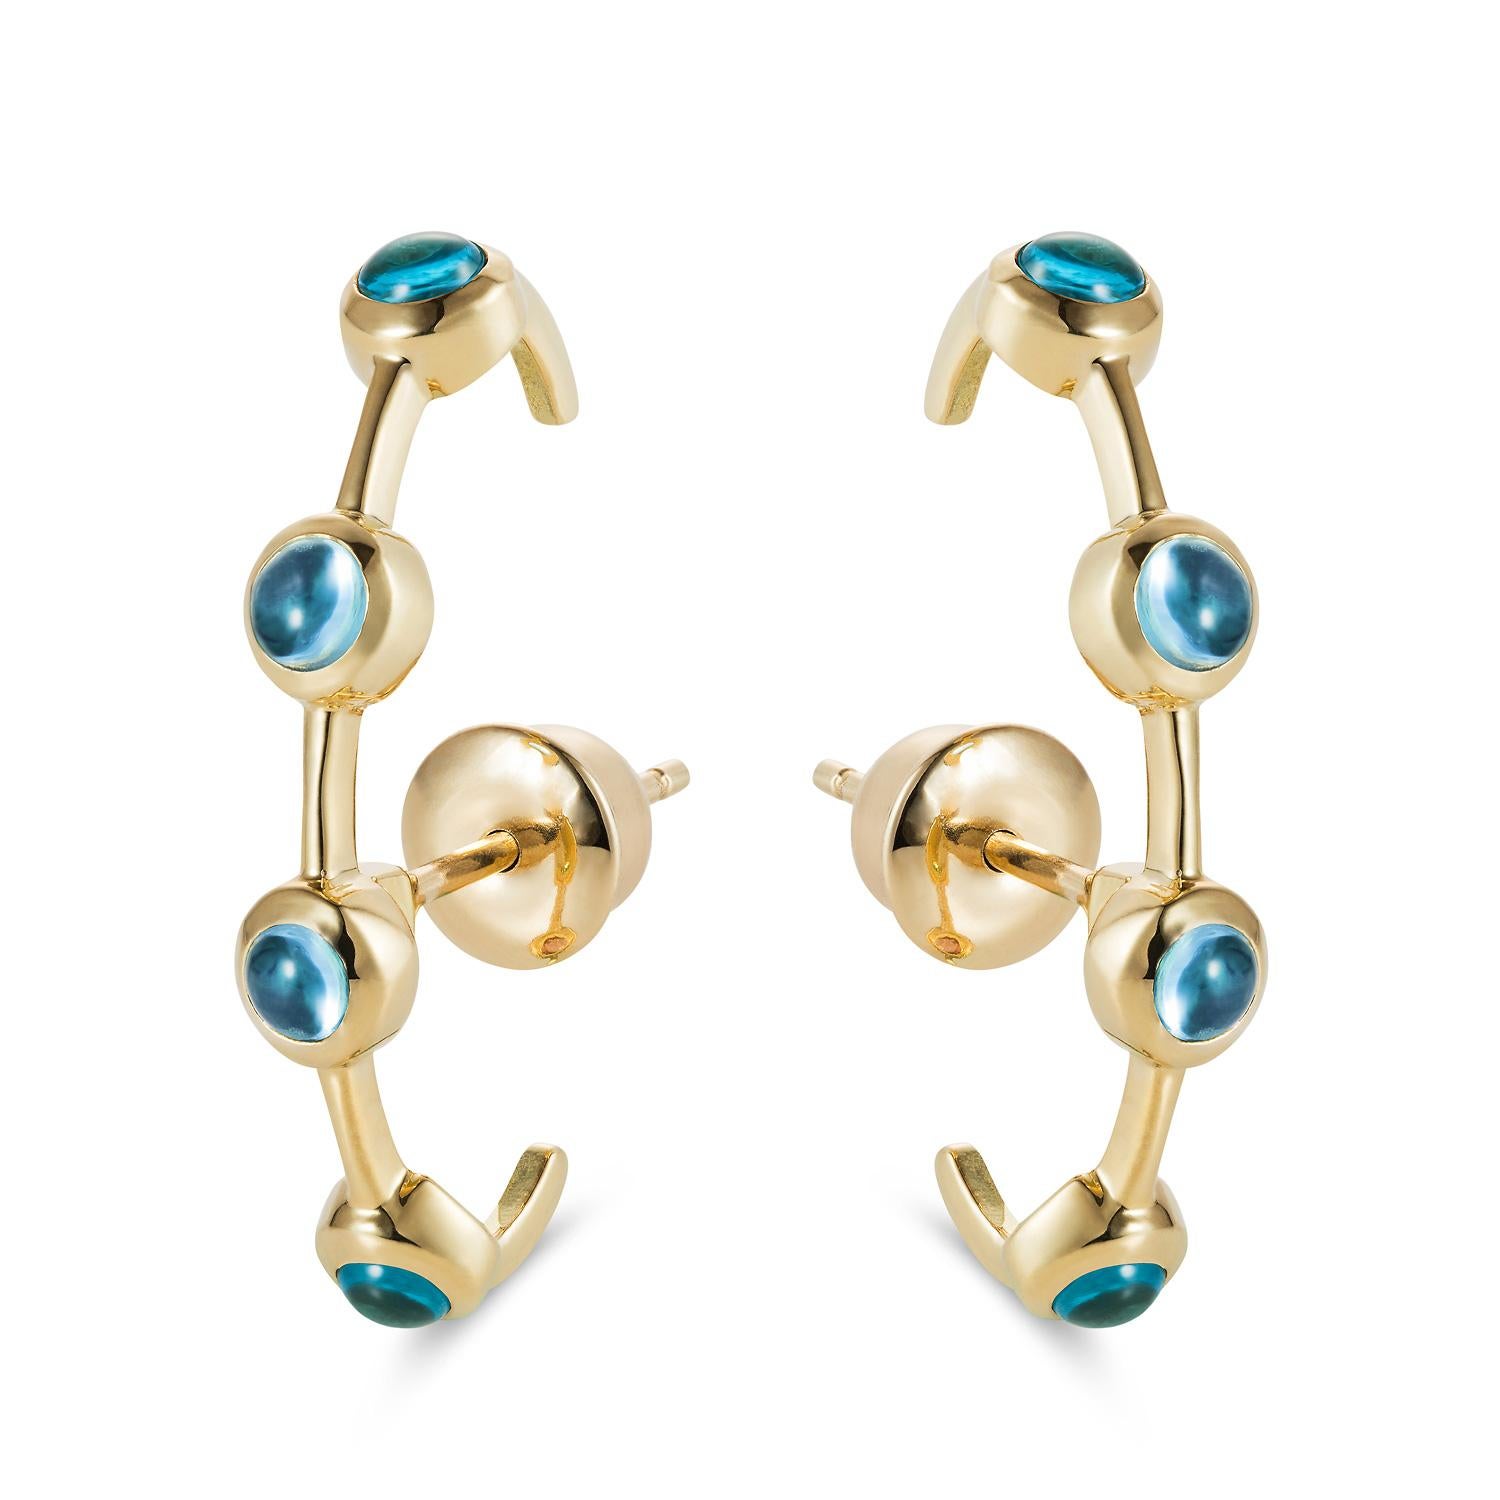 Contemporary Modern Minimalism Ear-Cuff Earrings in Rainbow Color Gemstones, 18K Yellow Gold